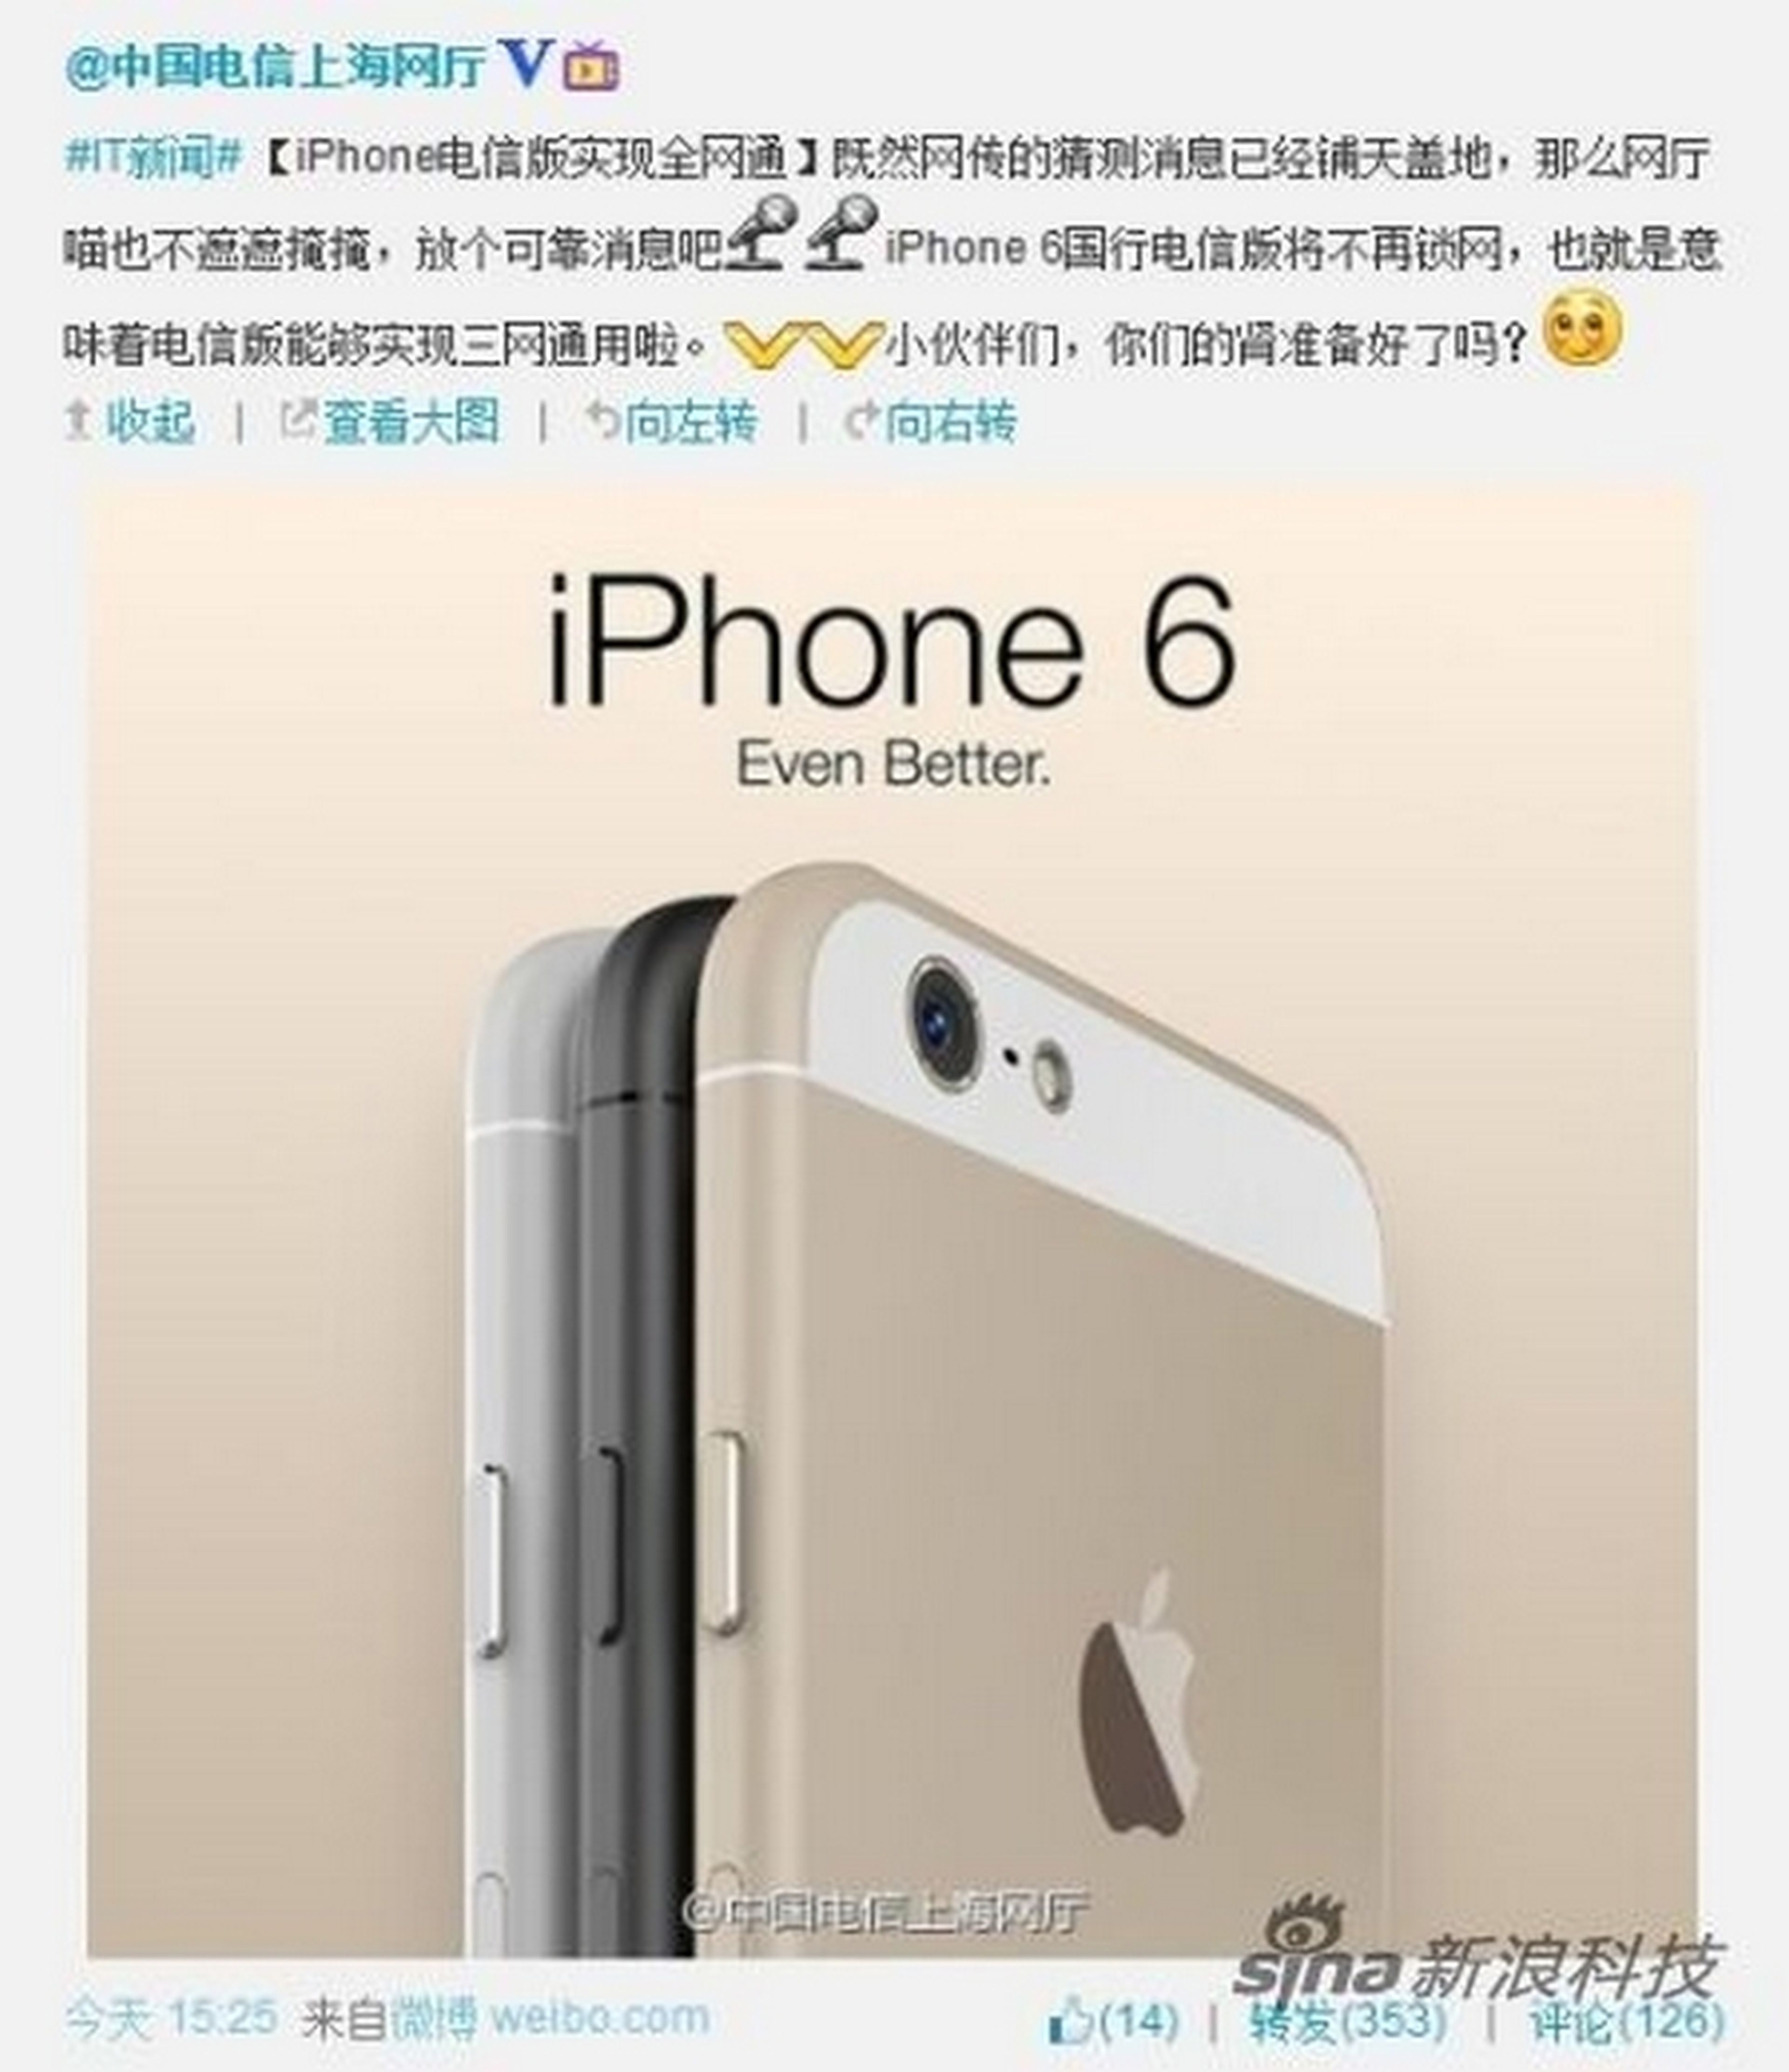 iPhone 6 según China Telecom